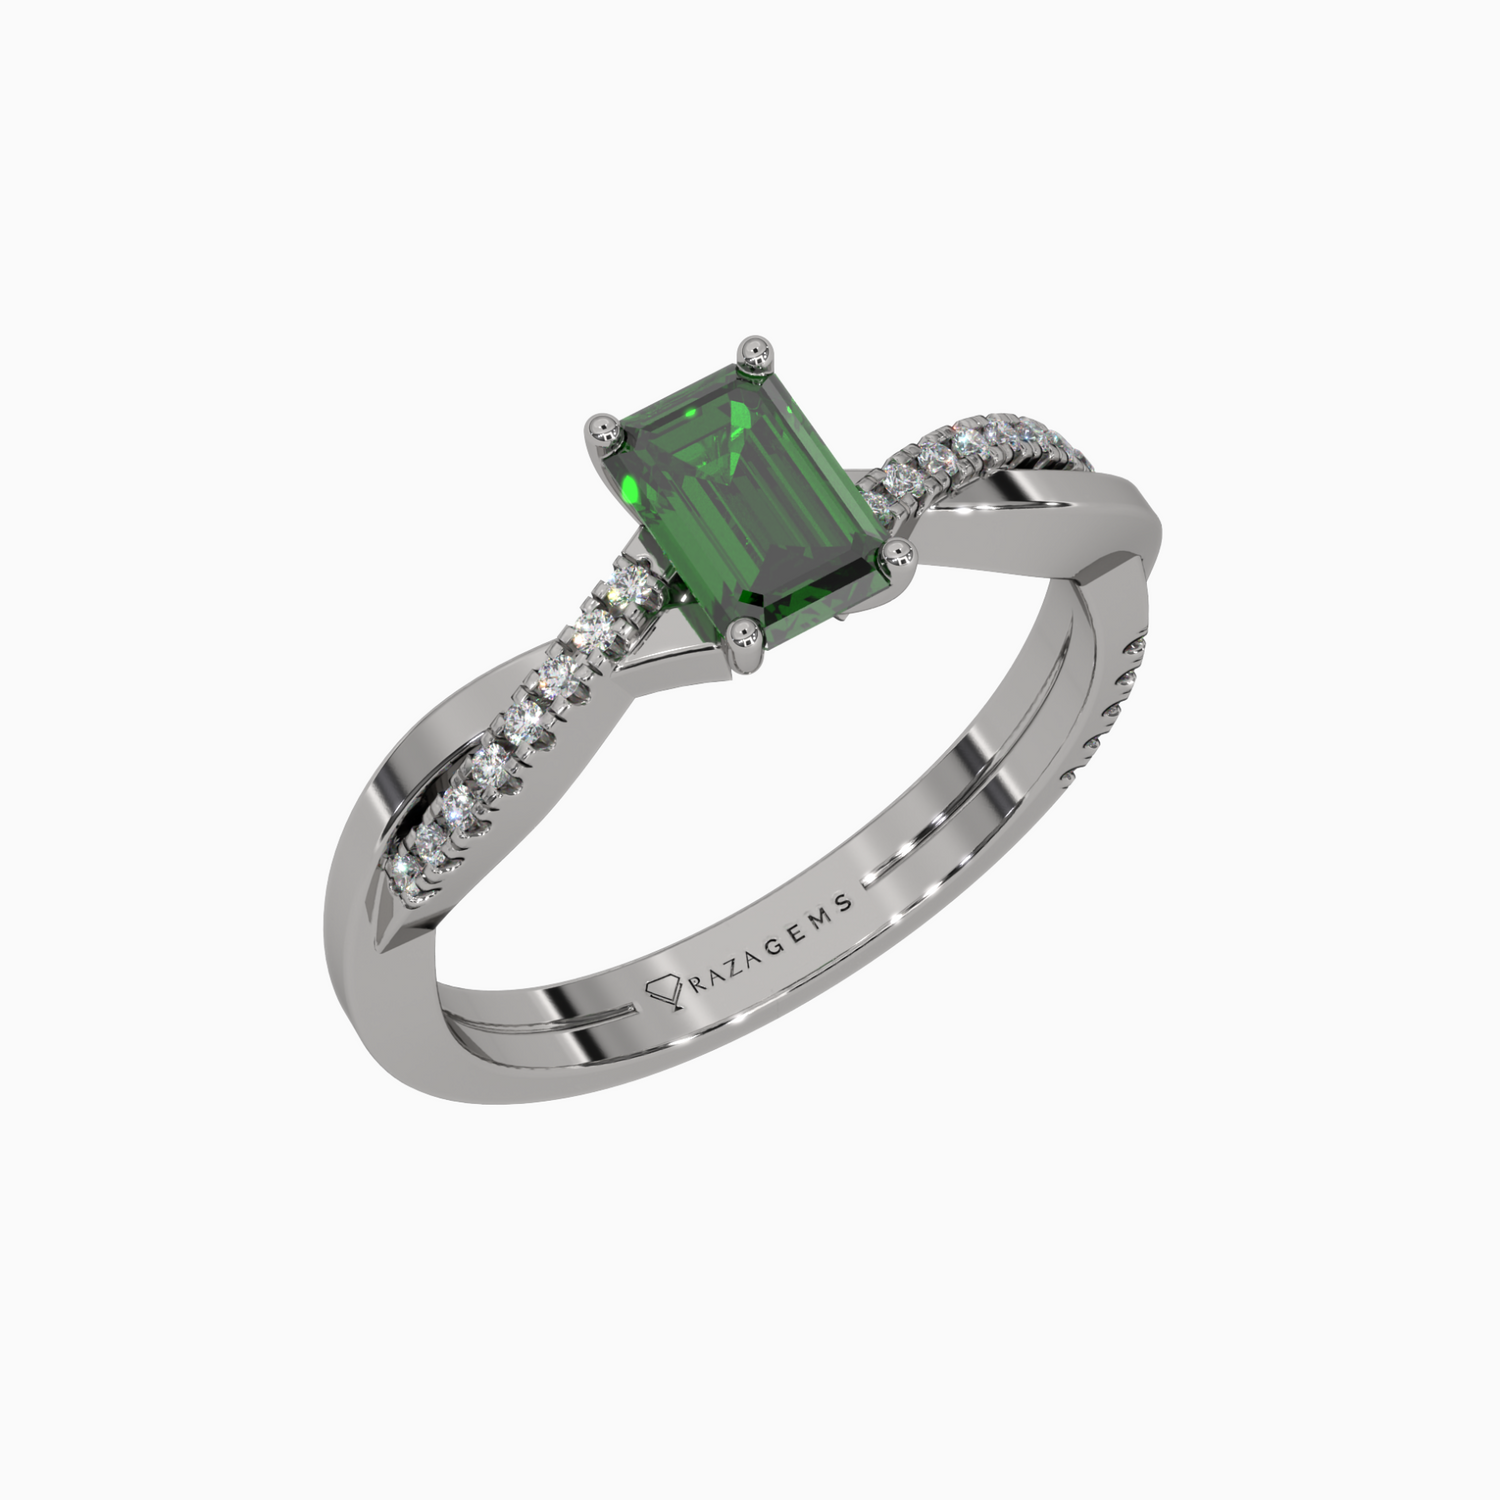 Emerald (Panna) Rings